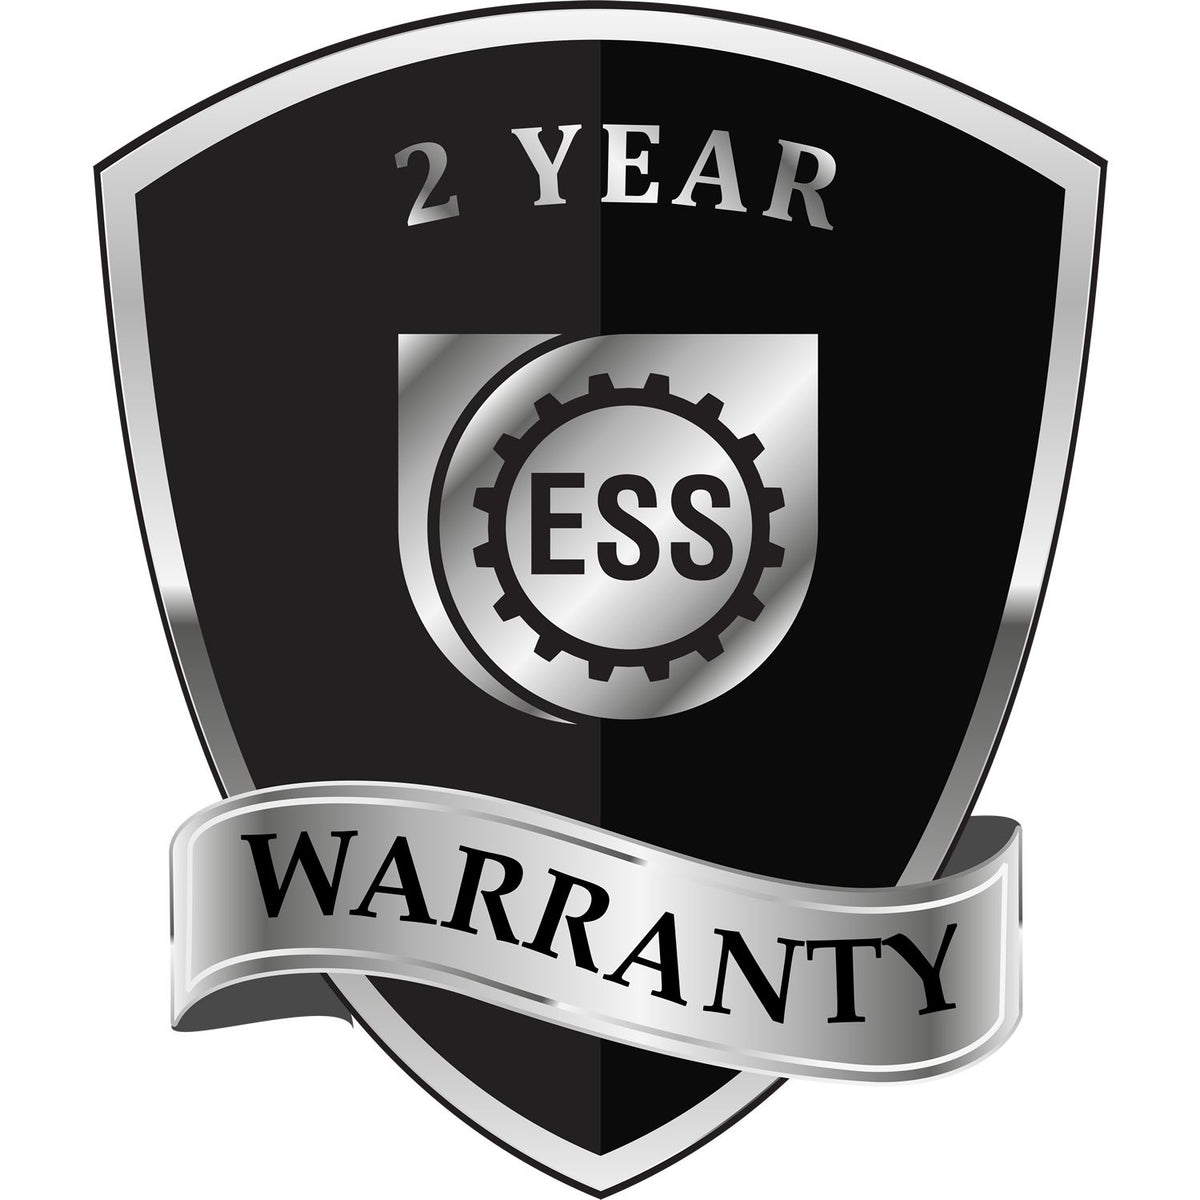 A black and silver badge or emblem showing warranty information for the Hybrid Vermont Land Surveyor Seal